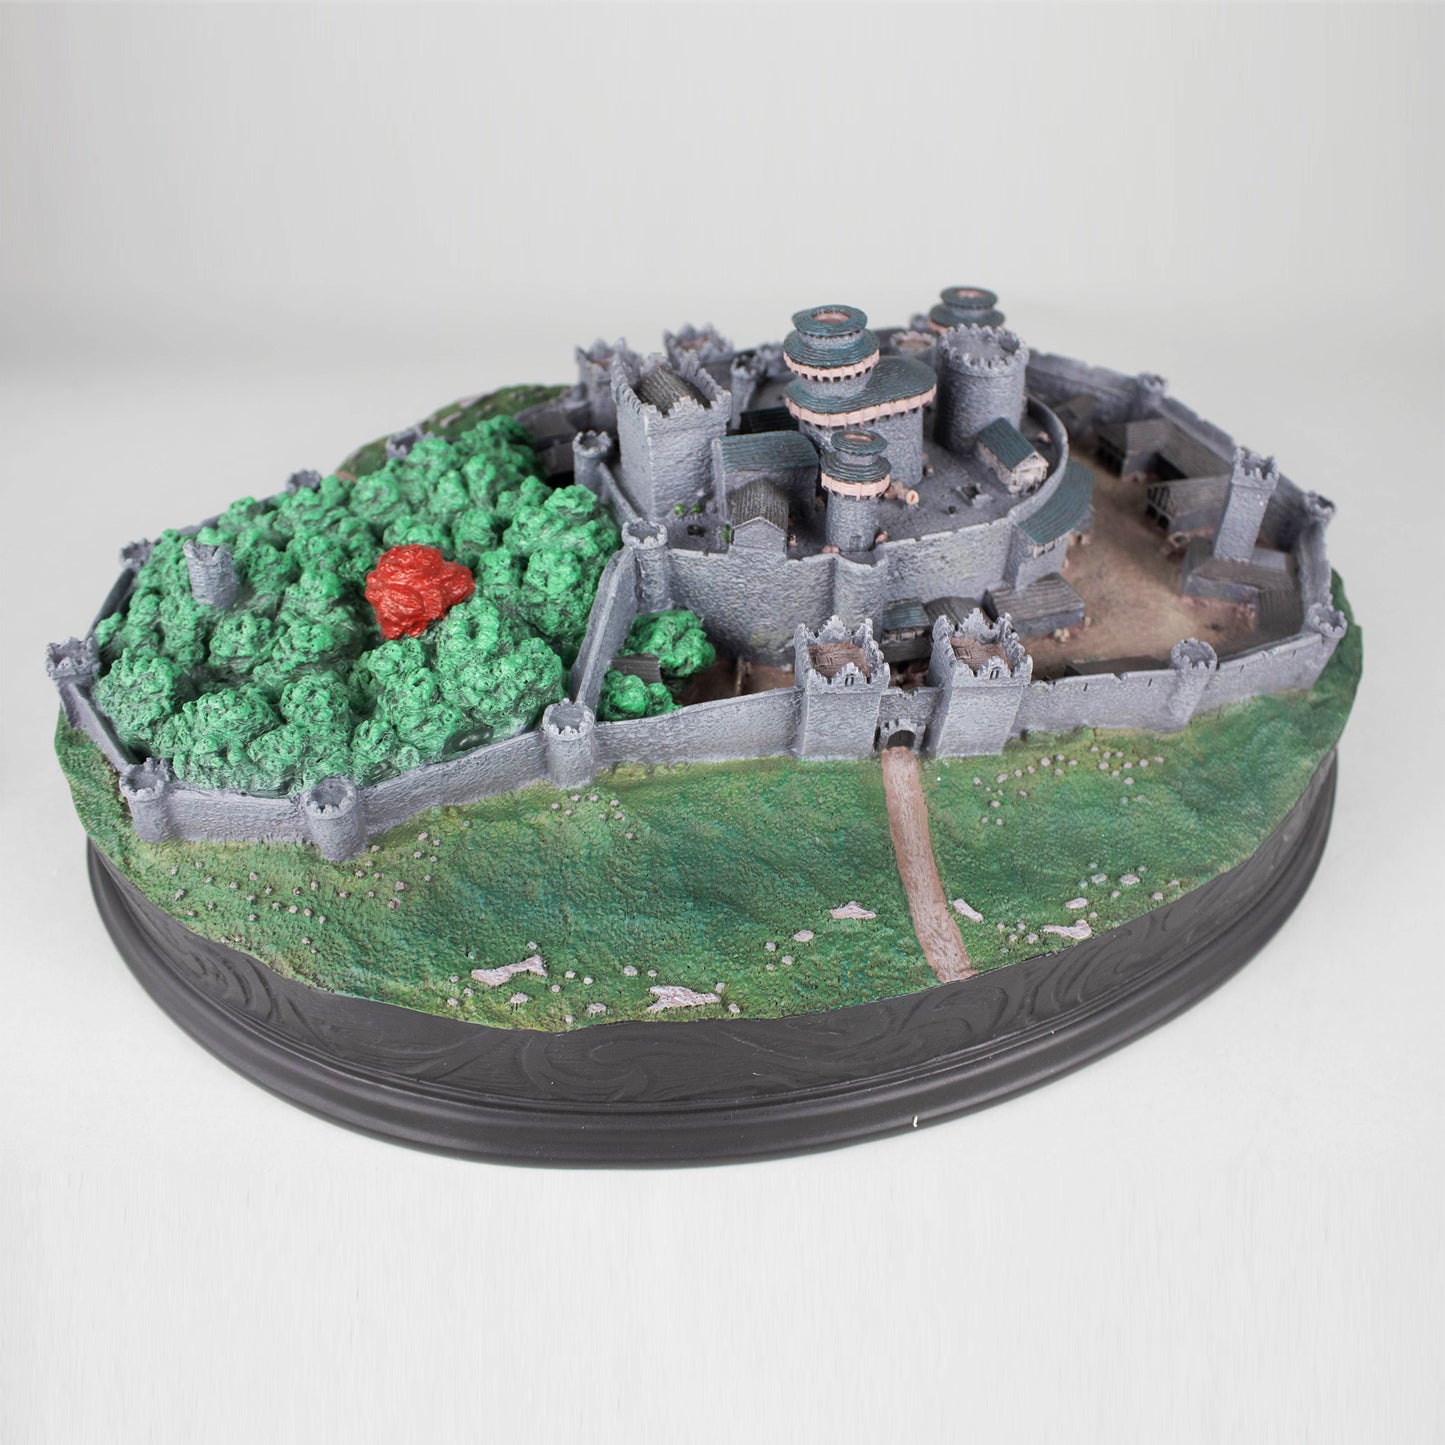 Game of Thrones "Castle Winterfell" Desktop Sculpture